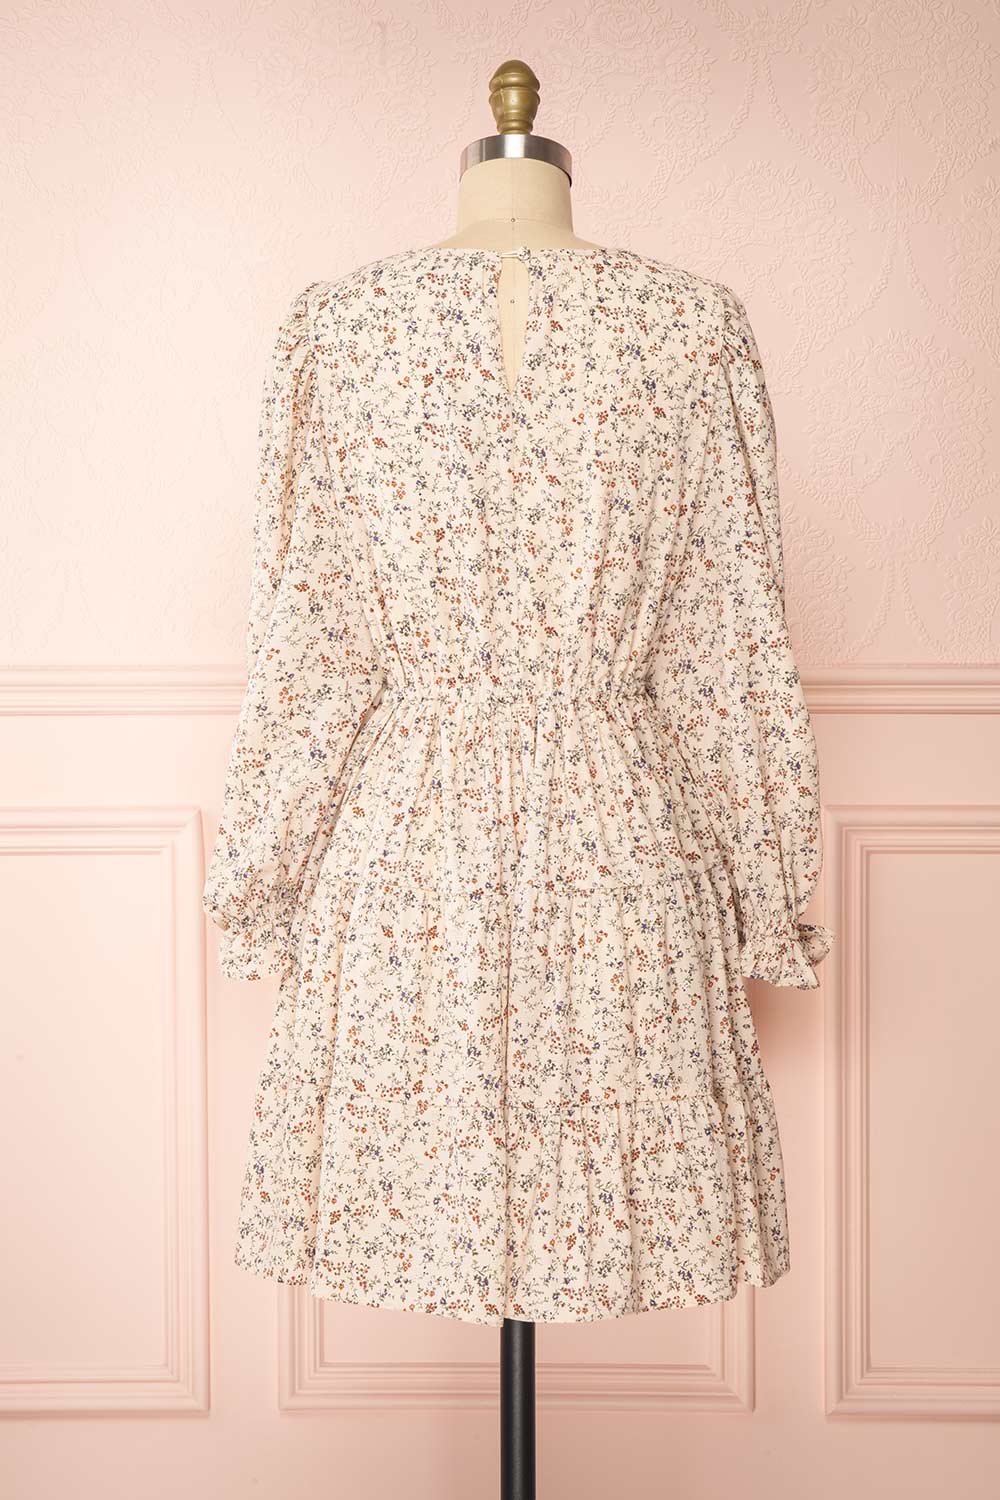 Bricelet Cream Floral Long Sleeve Dress | Boutique 1861 back view 